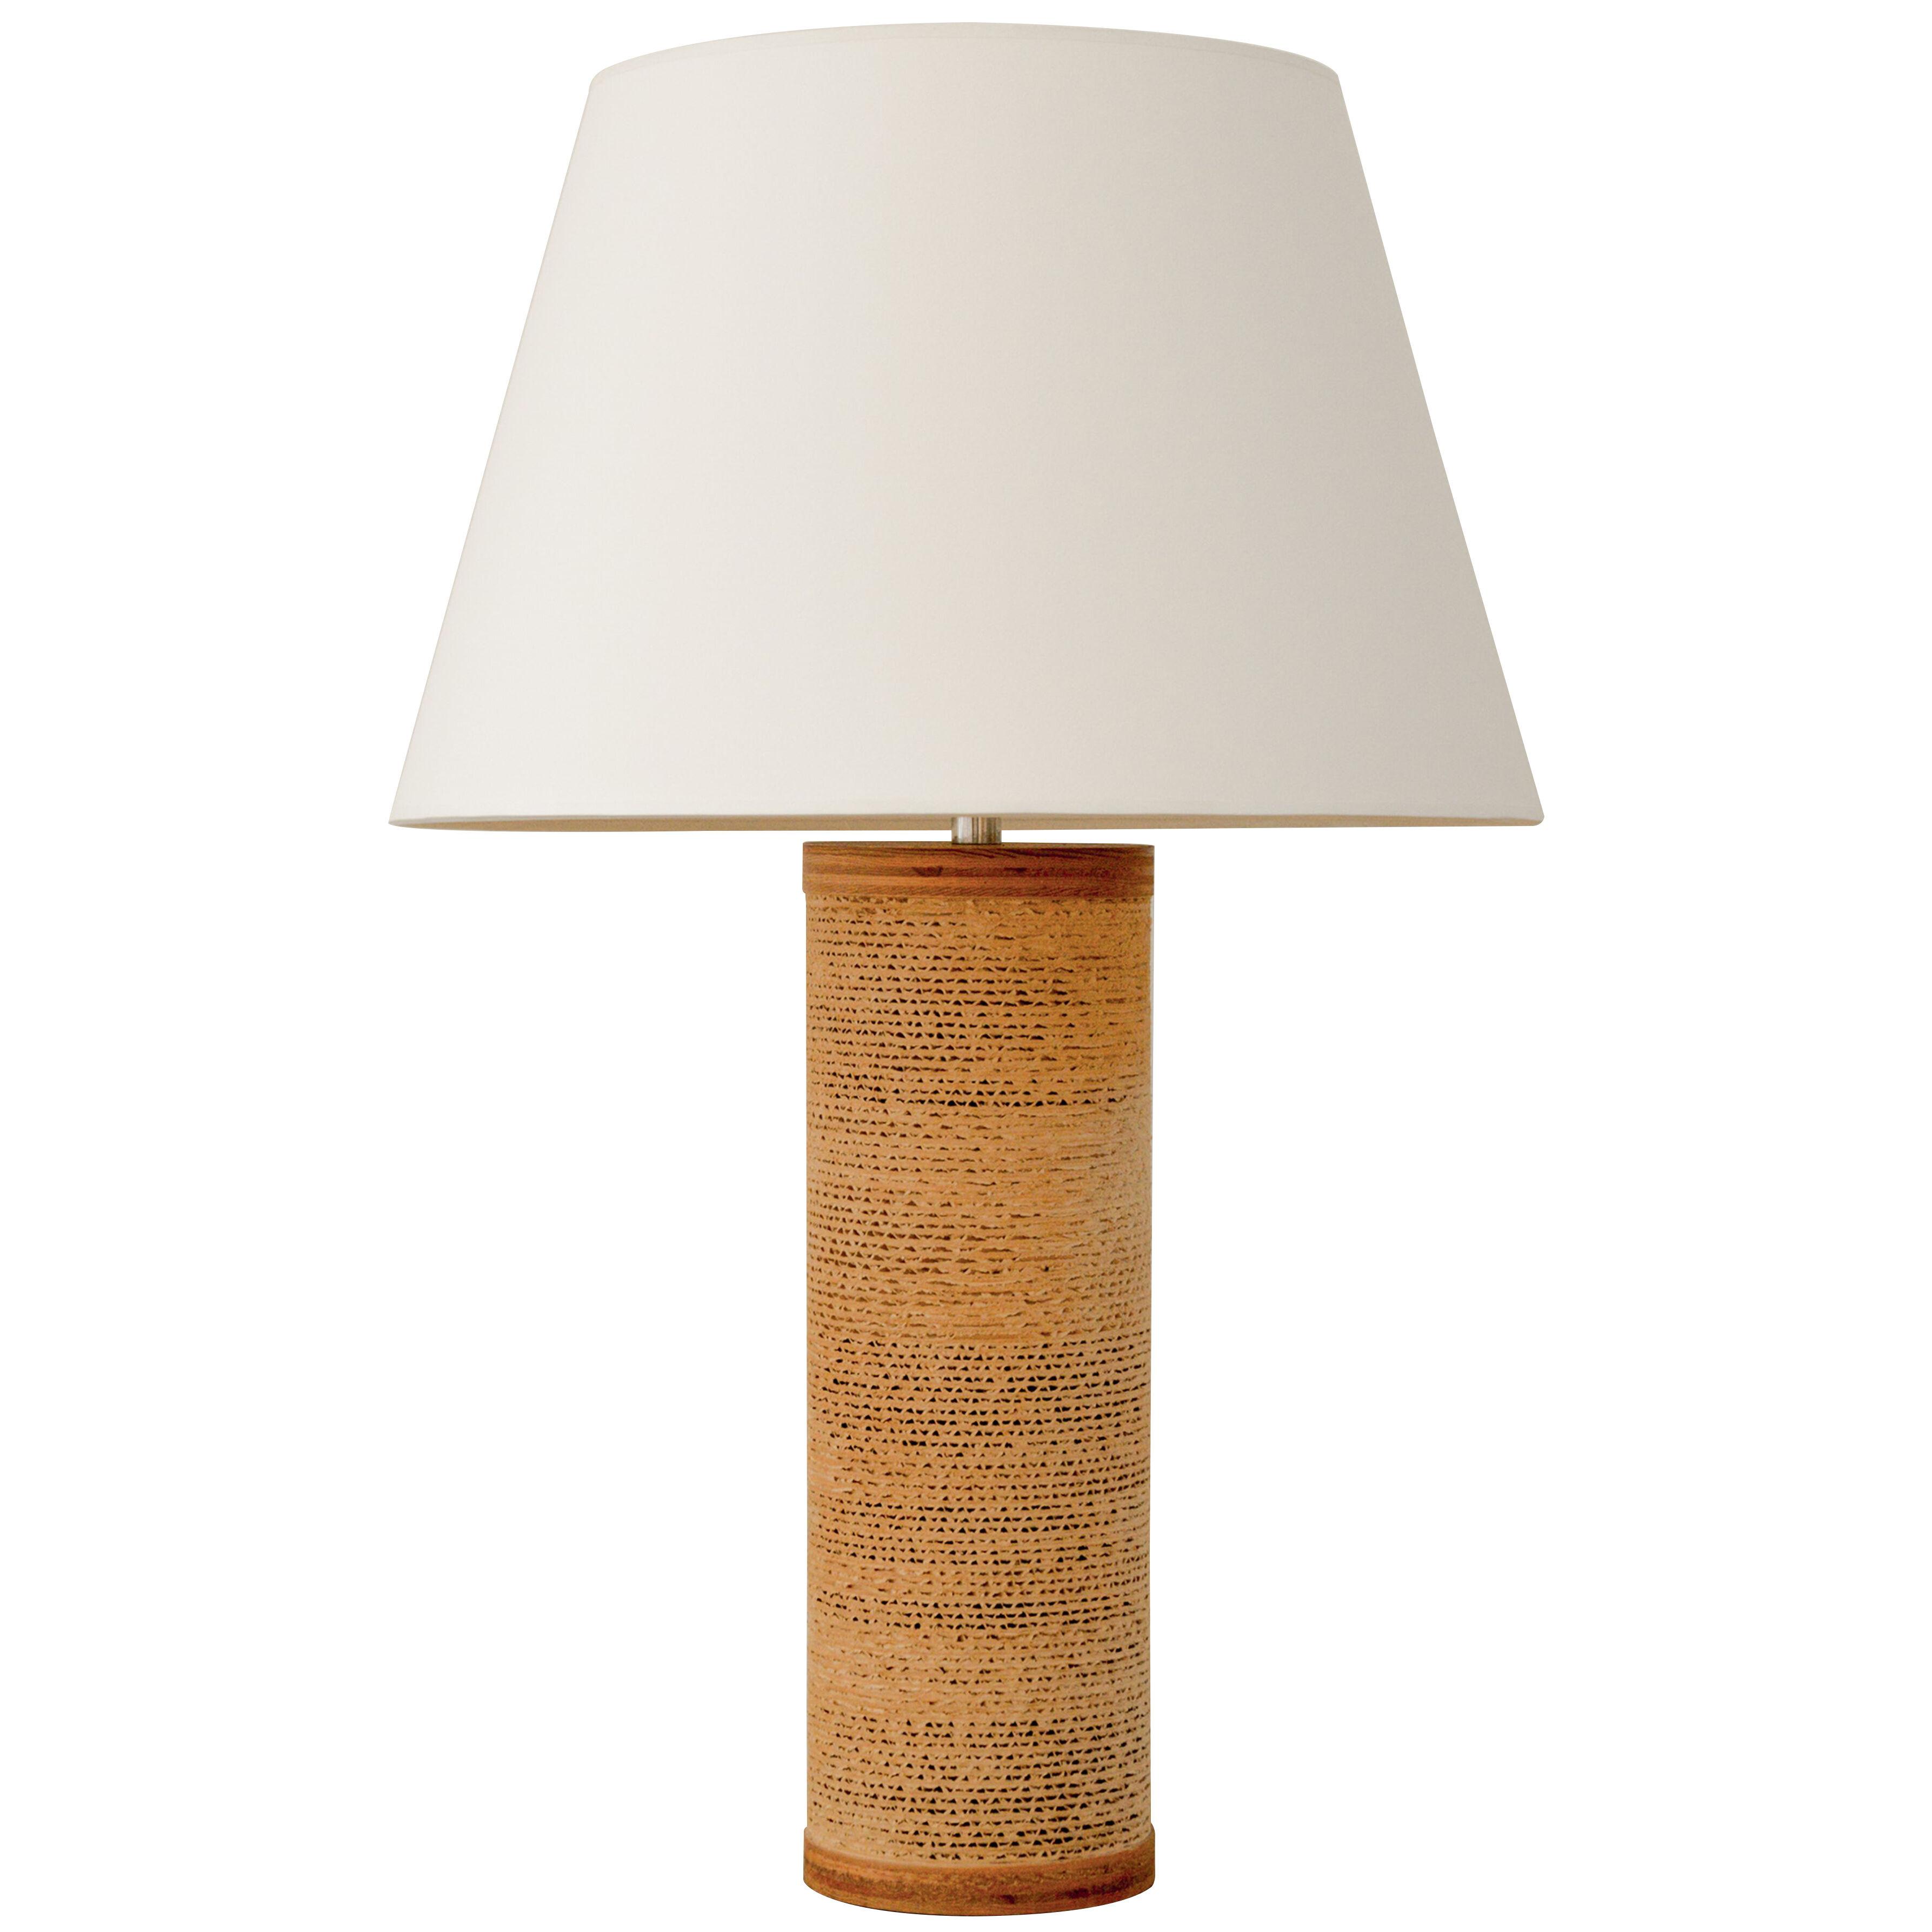 Gregory Van Pelt | Corrugated Table Lamp